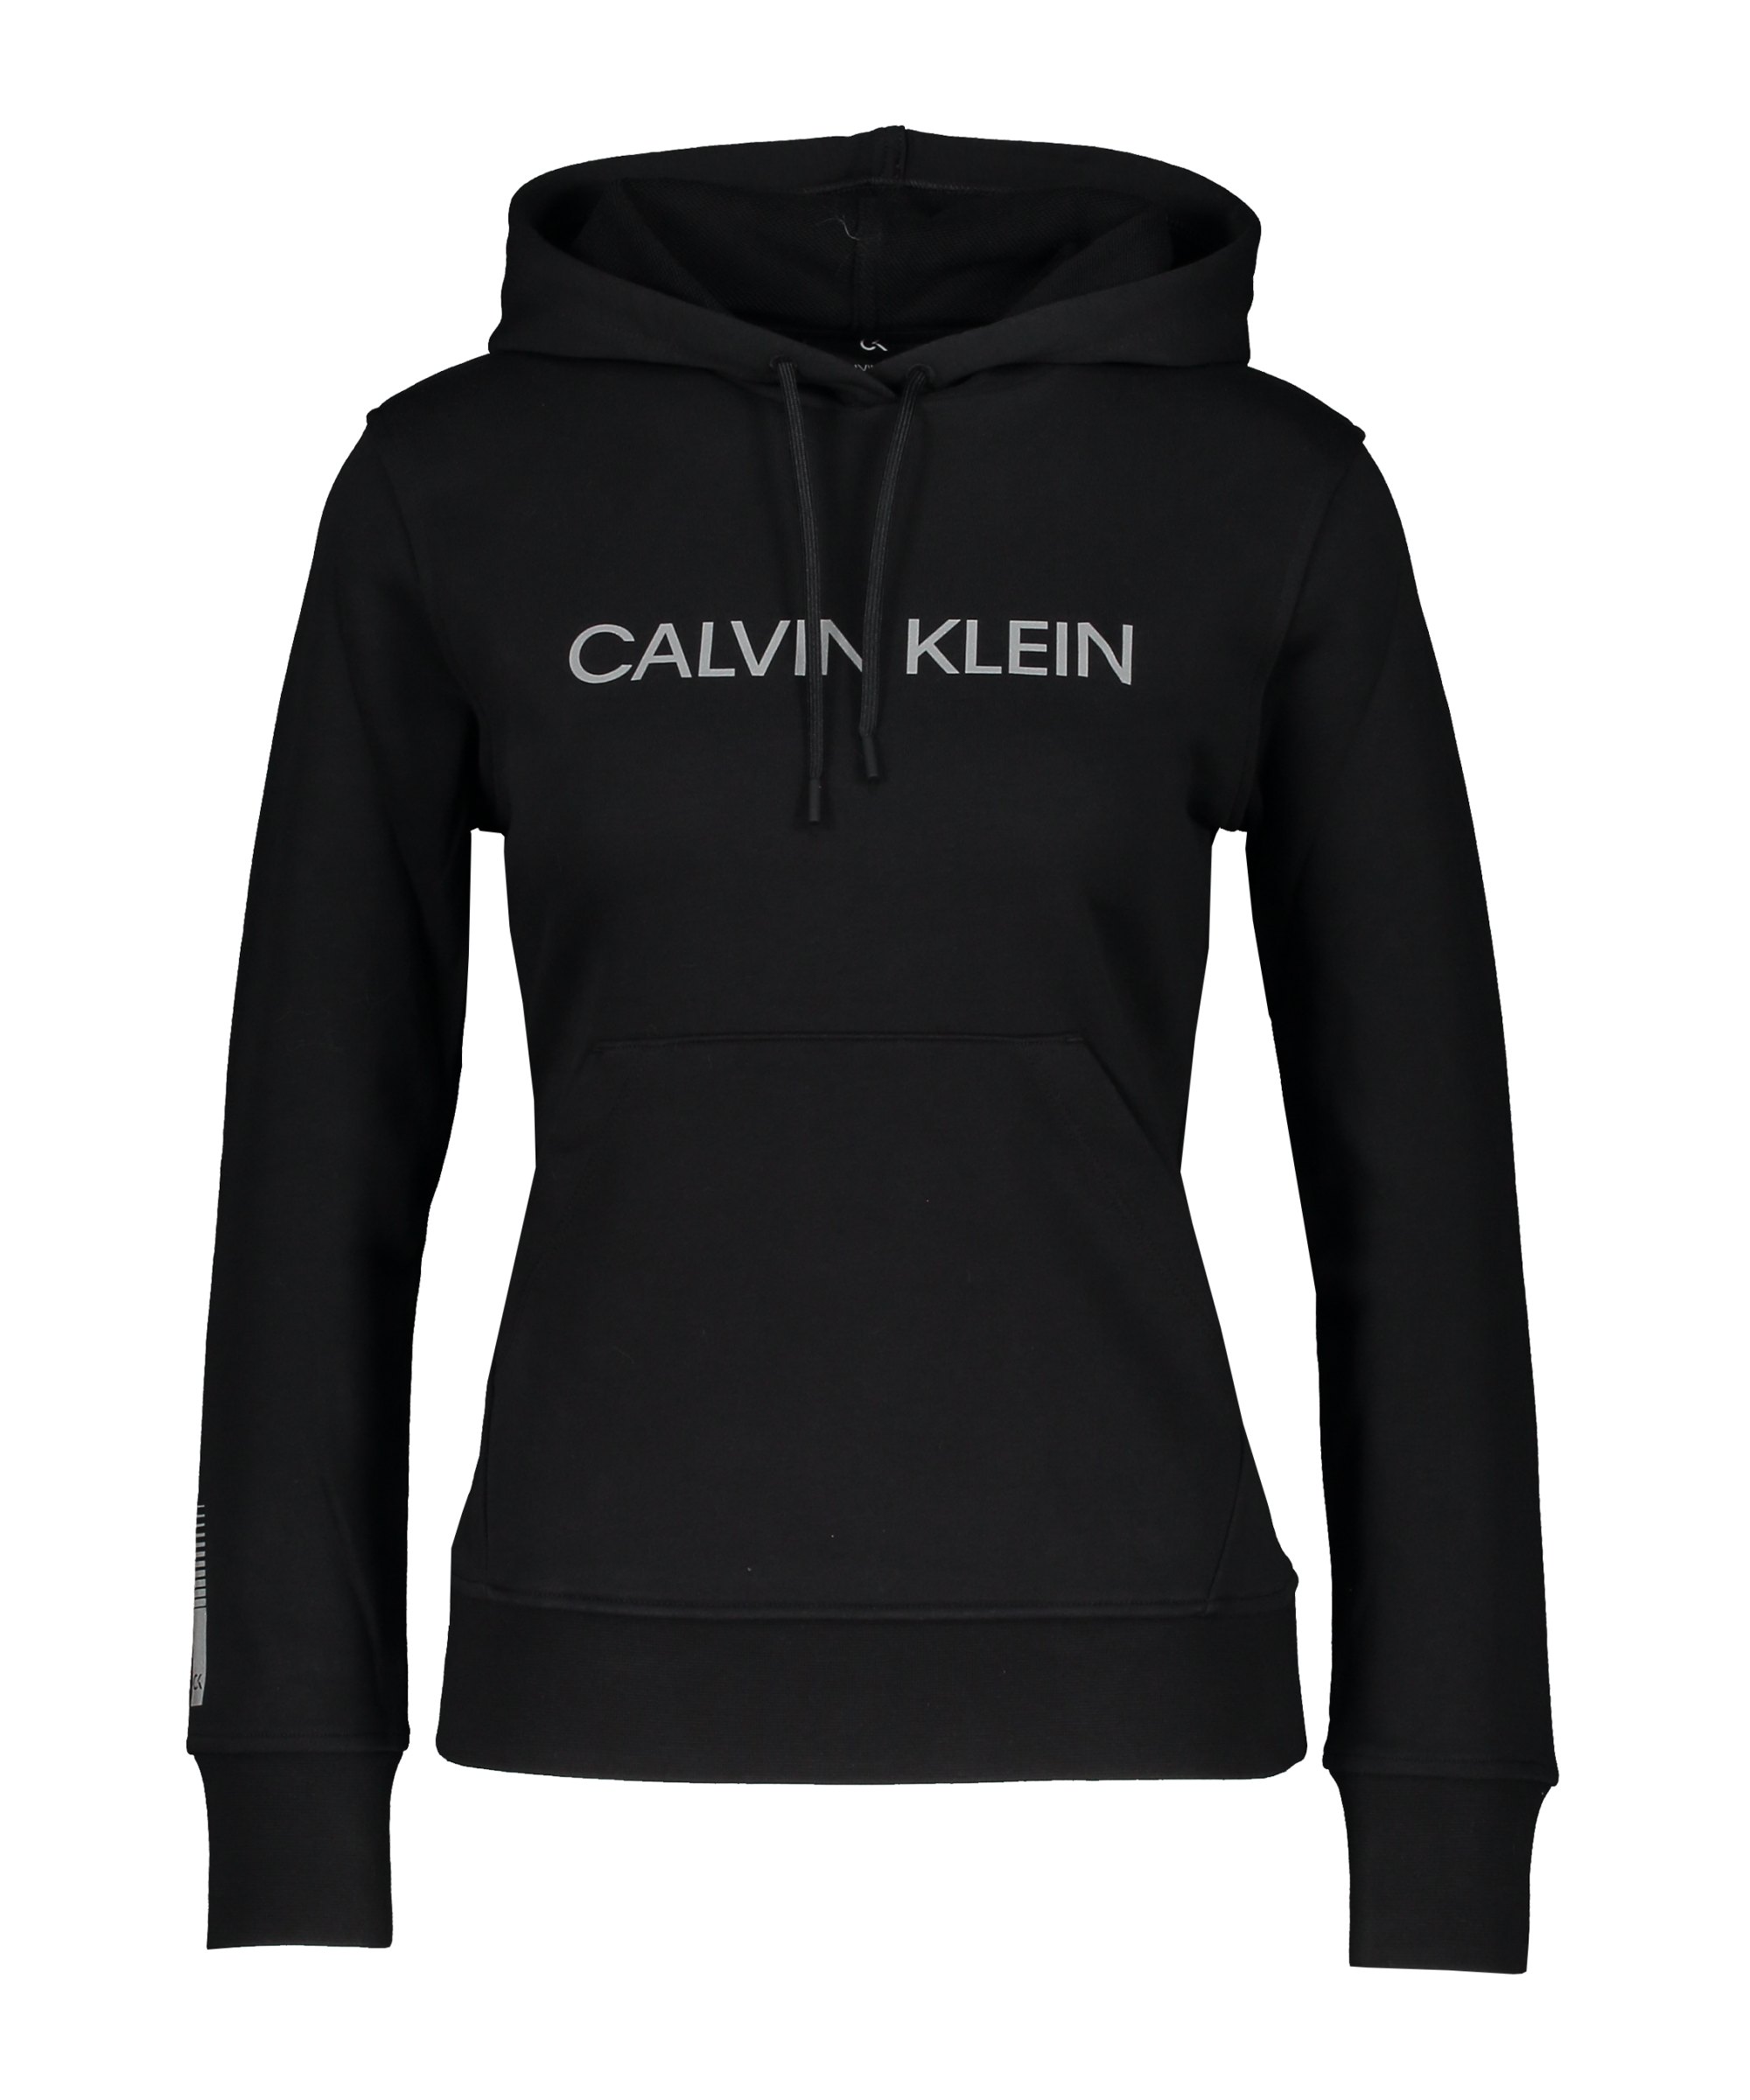 Calvin Klein Performance Hoody Damen F001 - schwarz